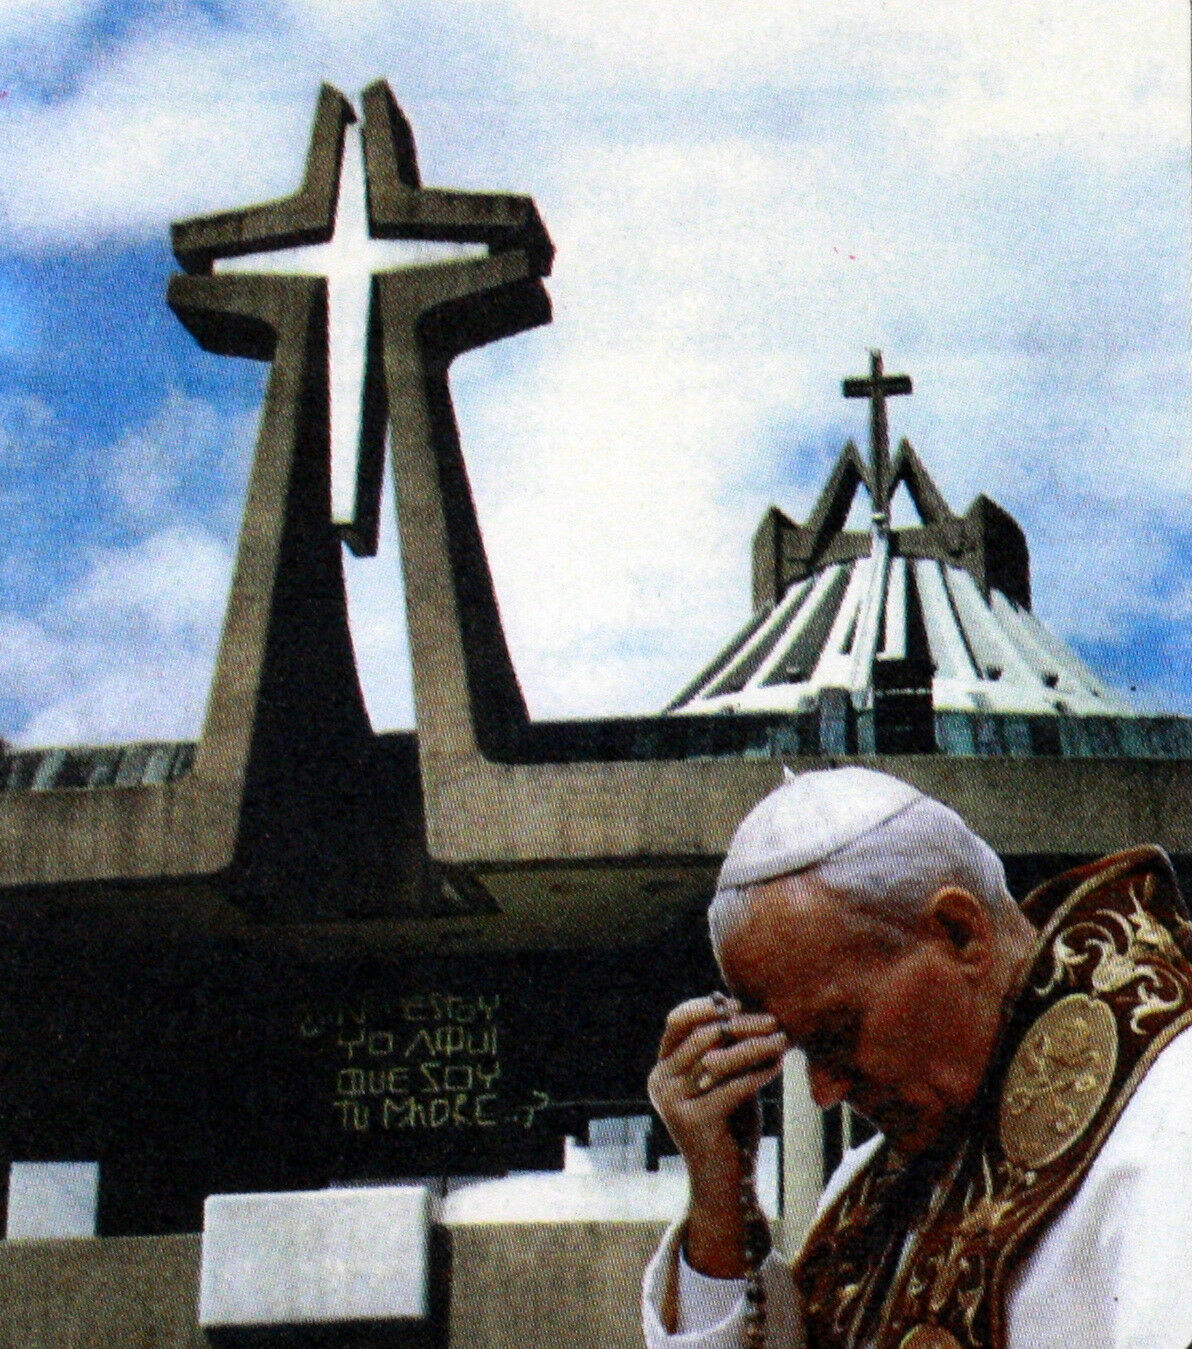 Mexico Trip / Travel Pope John Paul Ii Vatican Envelope Pa91